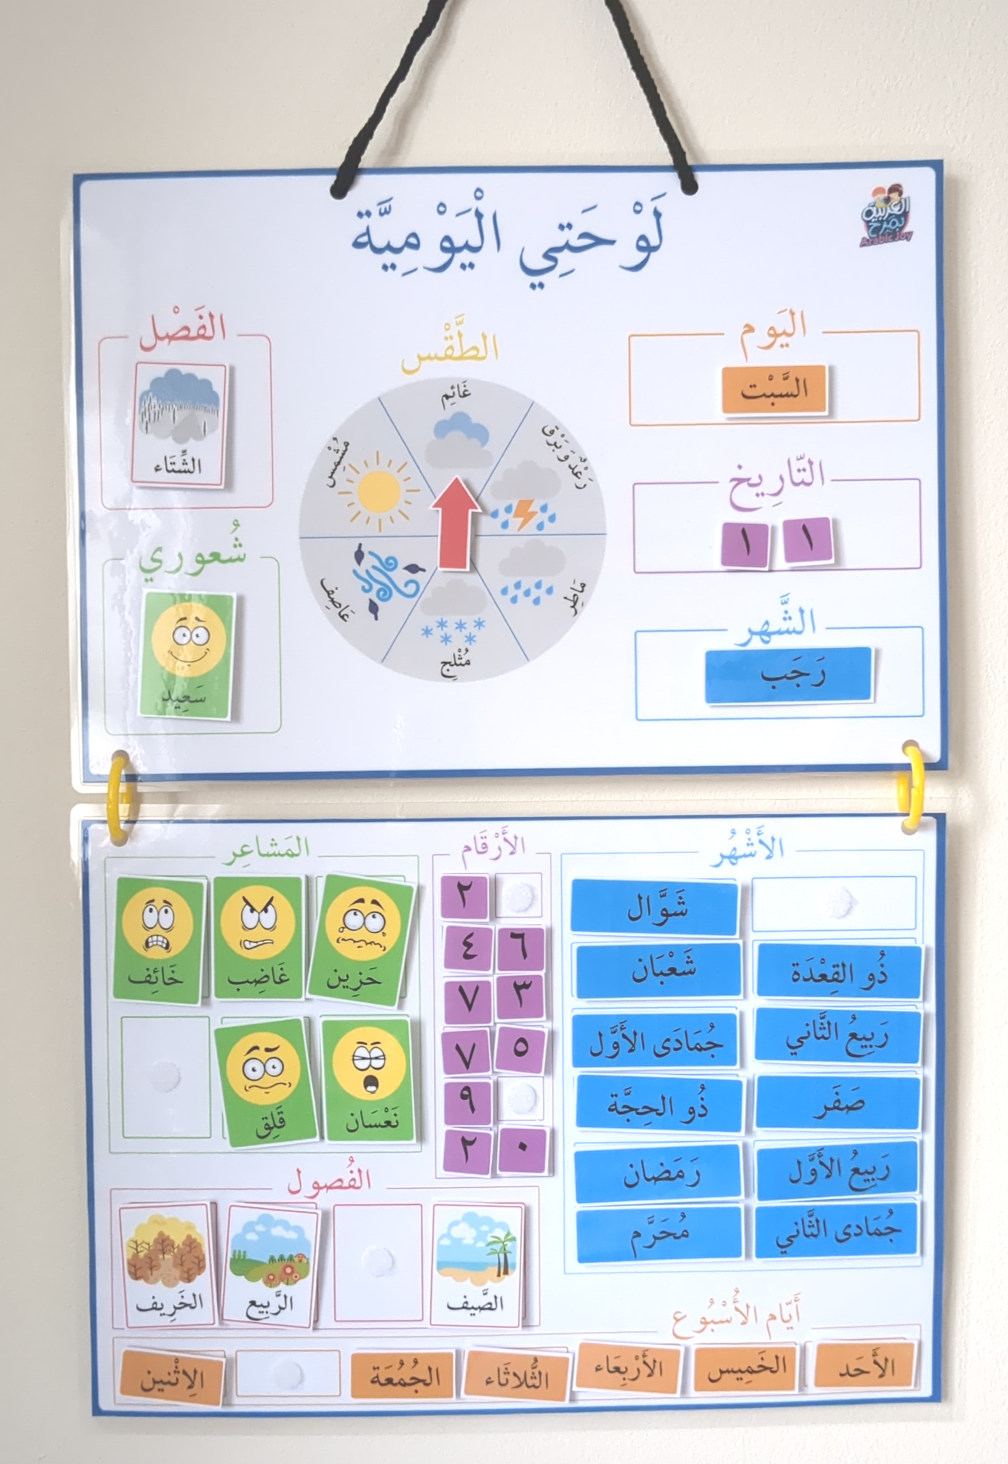 My Daily Arabic Calendar - Ready to Post  - لوحتي اليومية